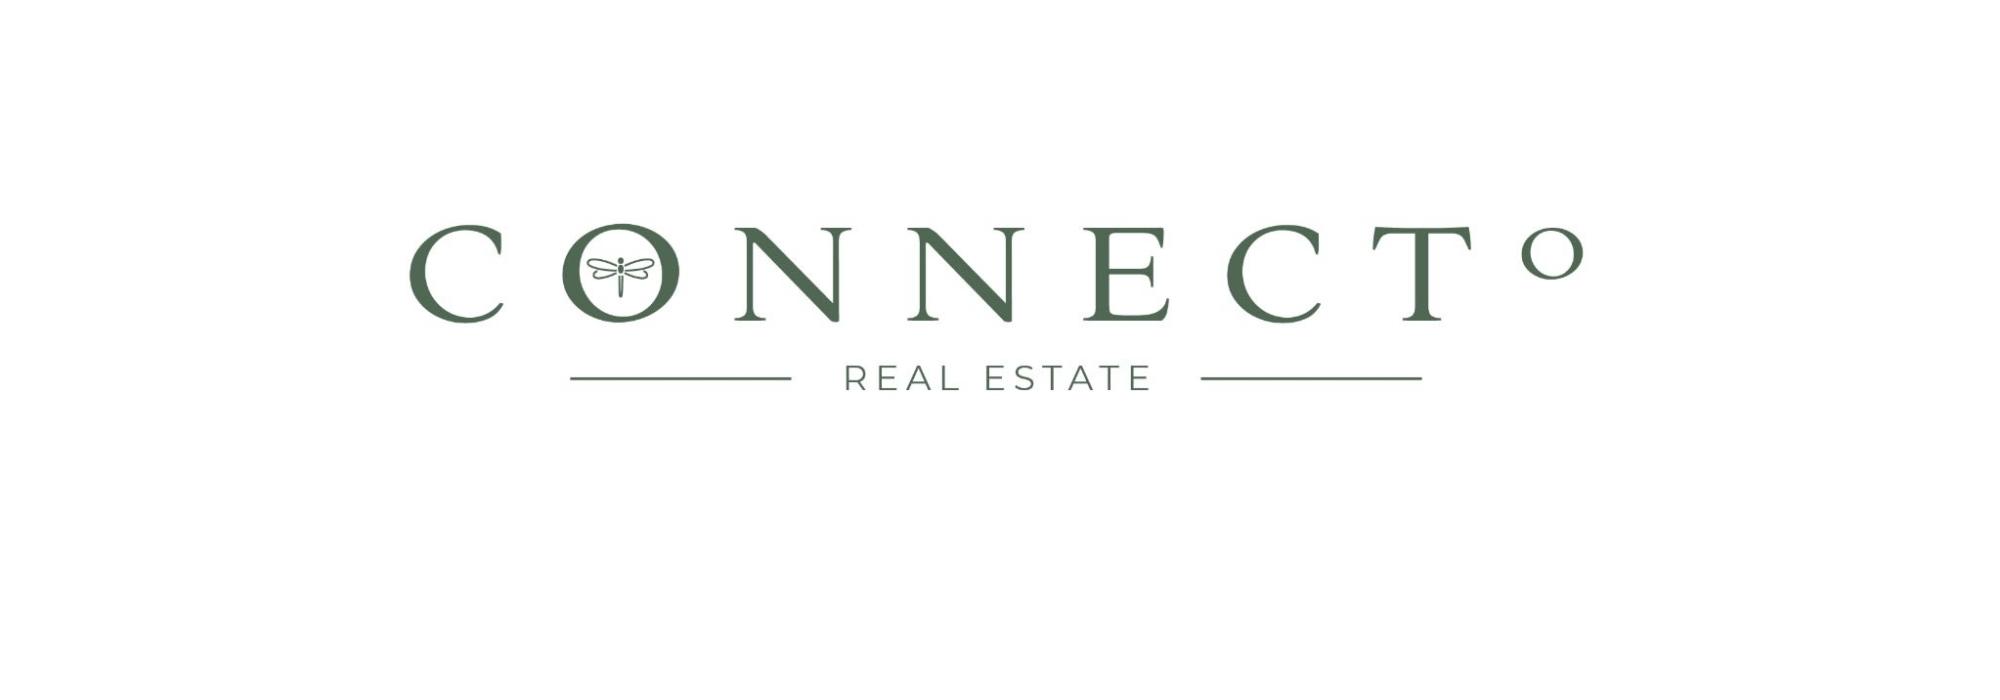 Connecto Real Estate